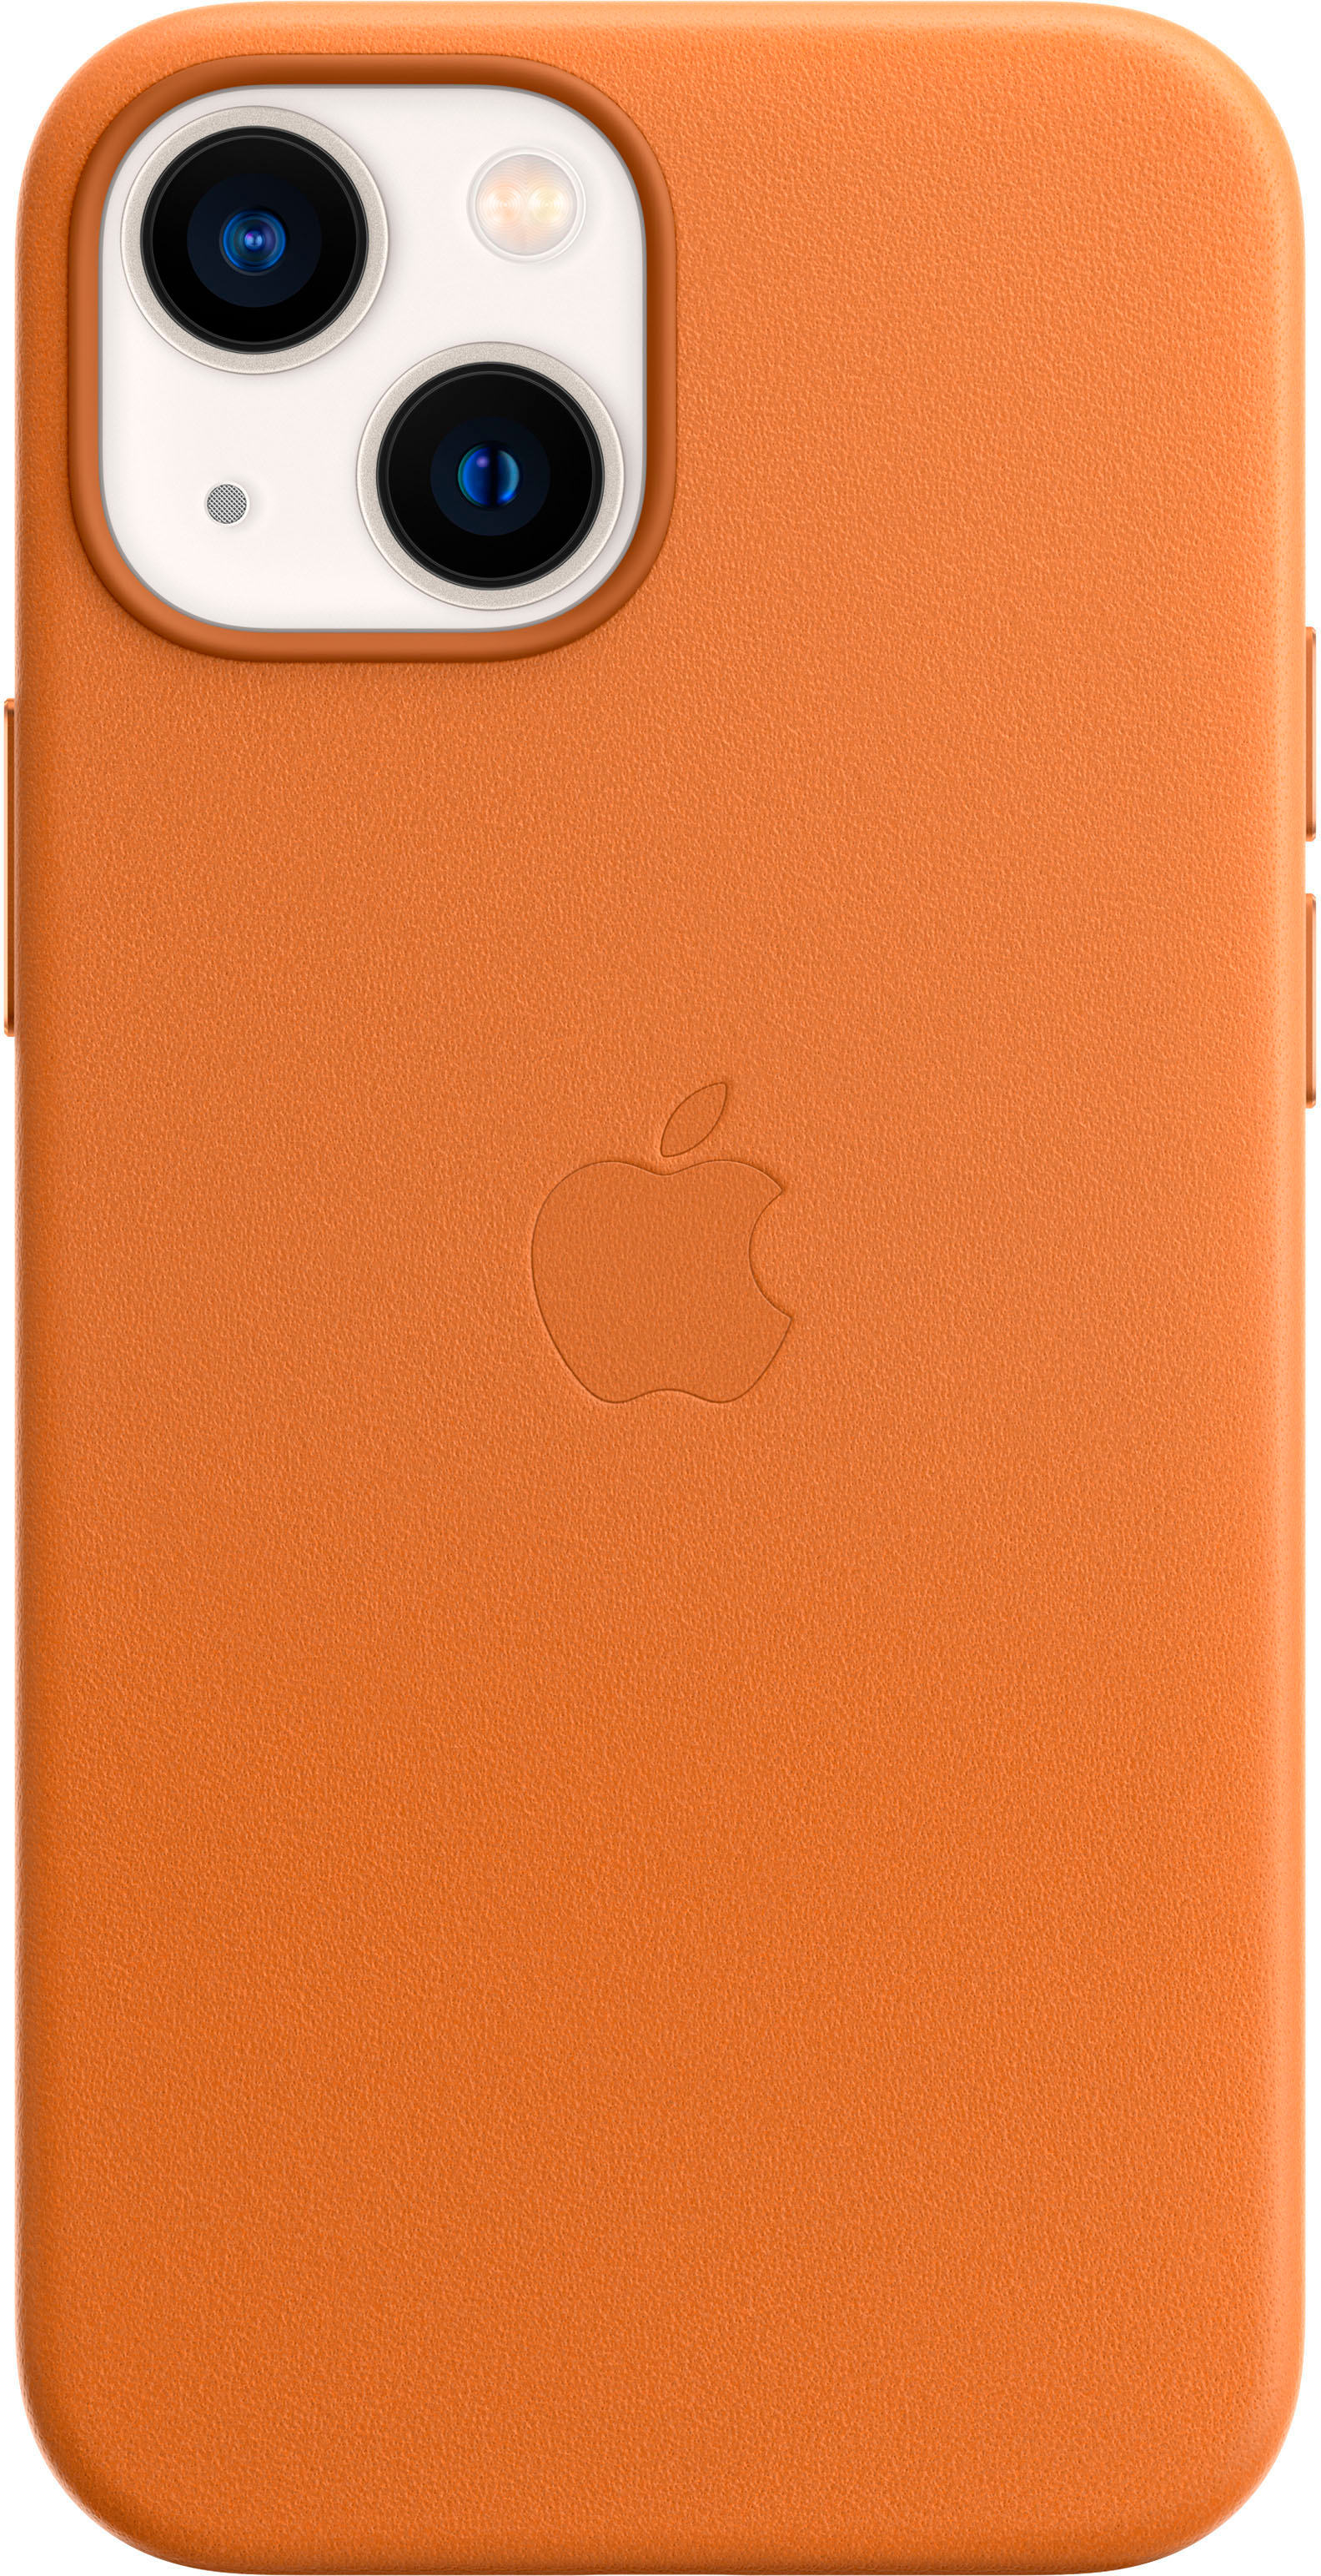 iPhone 12 mini leather cases